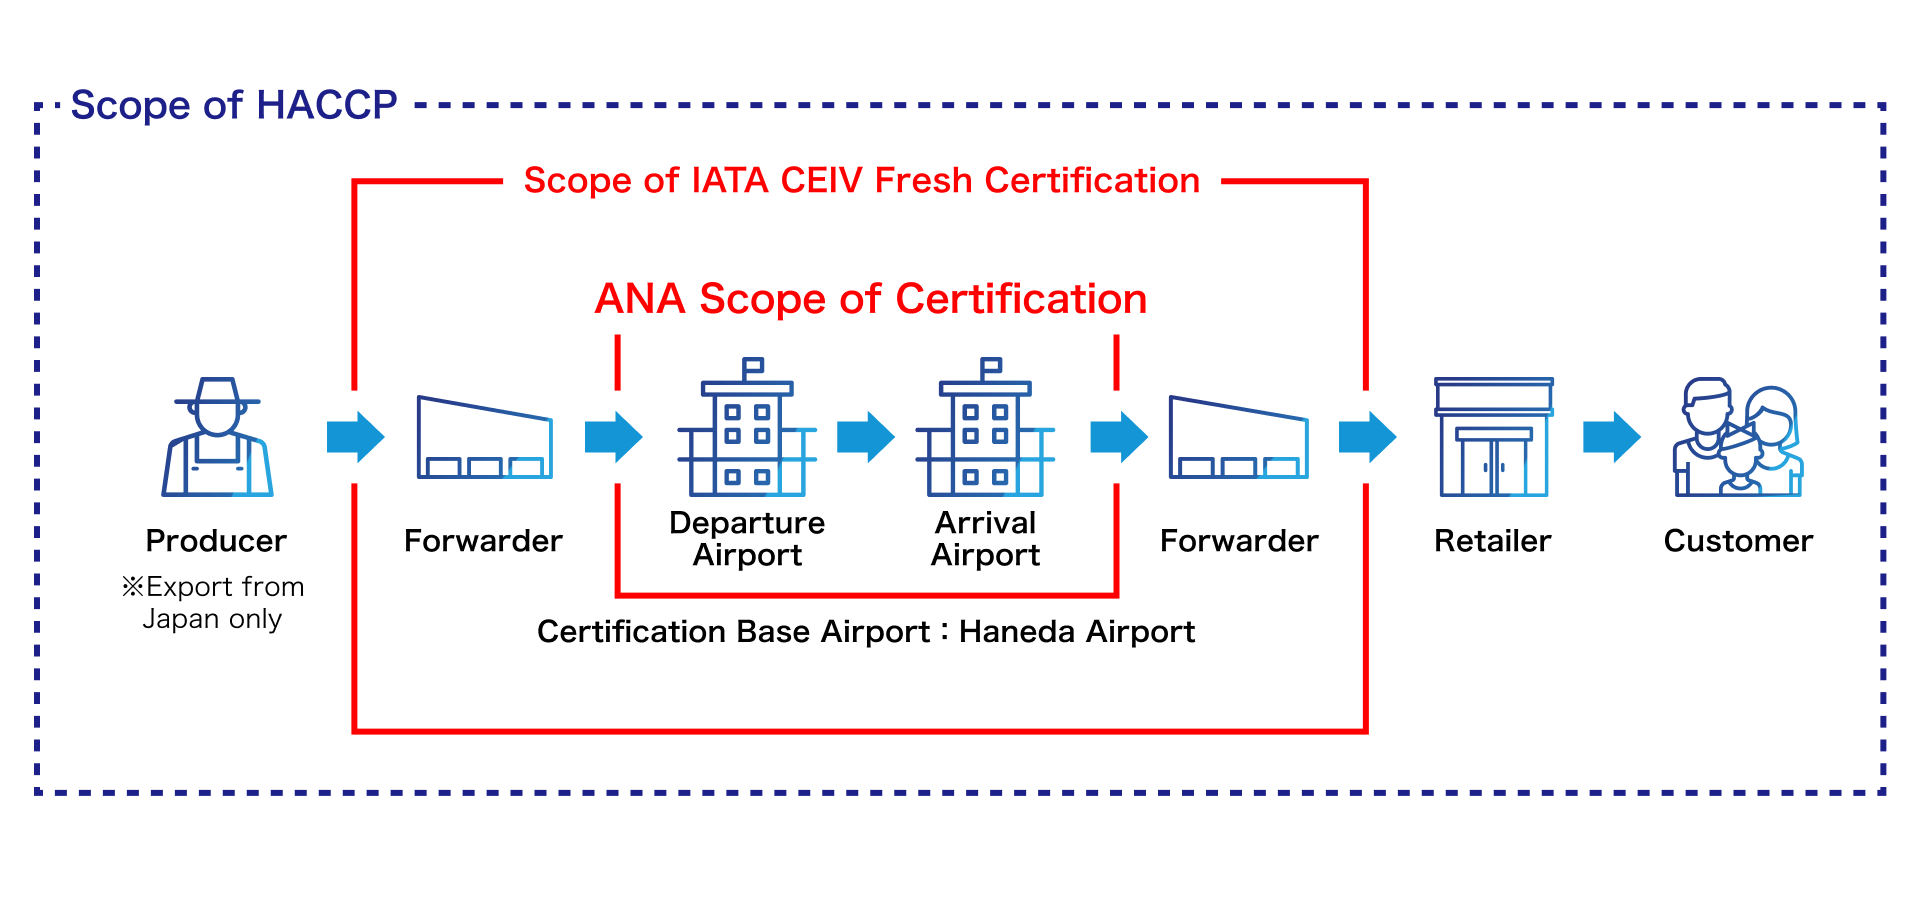 Scope of GDP Scope of IATA CEIV Fresh Certification Scope of certification granted to ANA